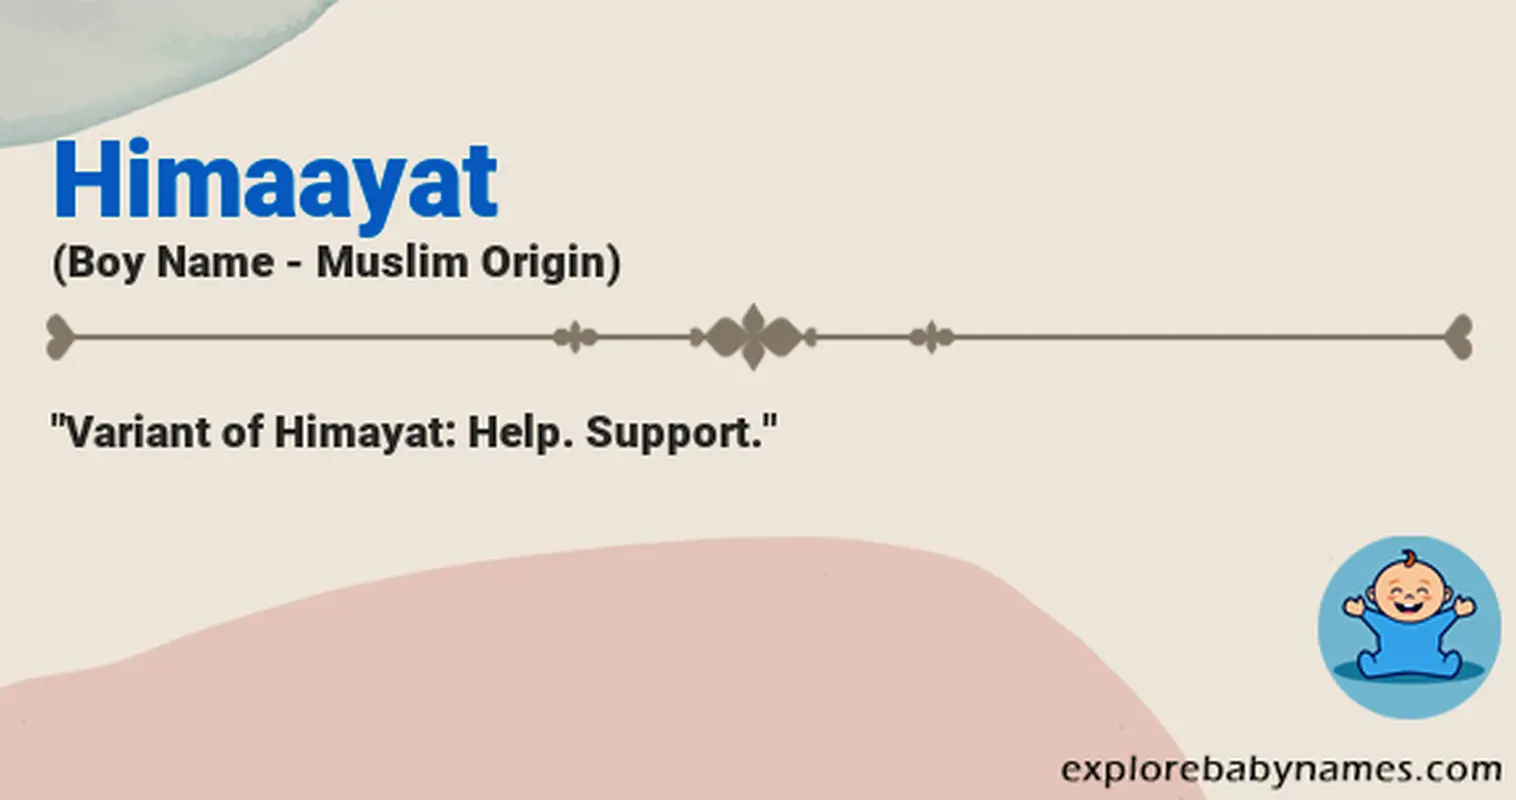 Meaning of Himaayat